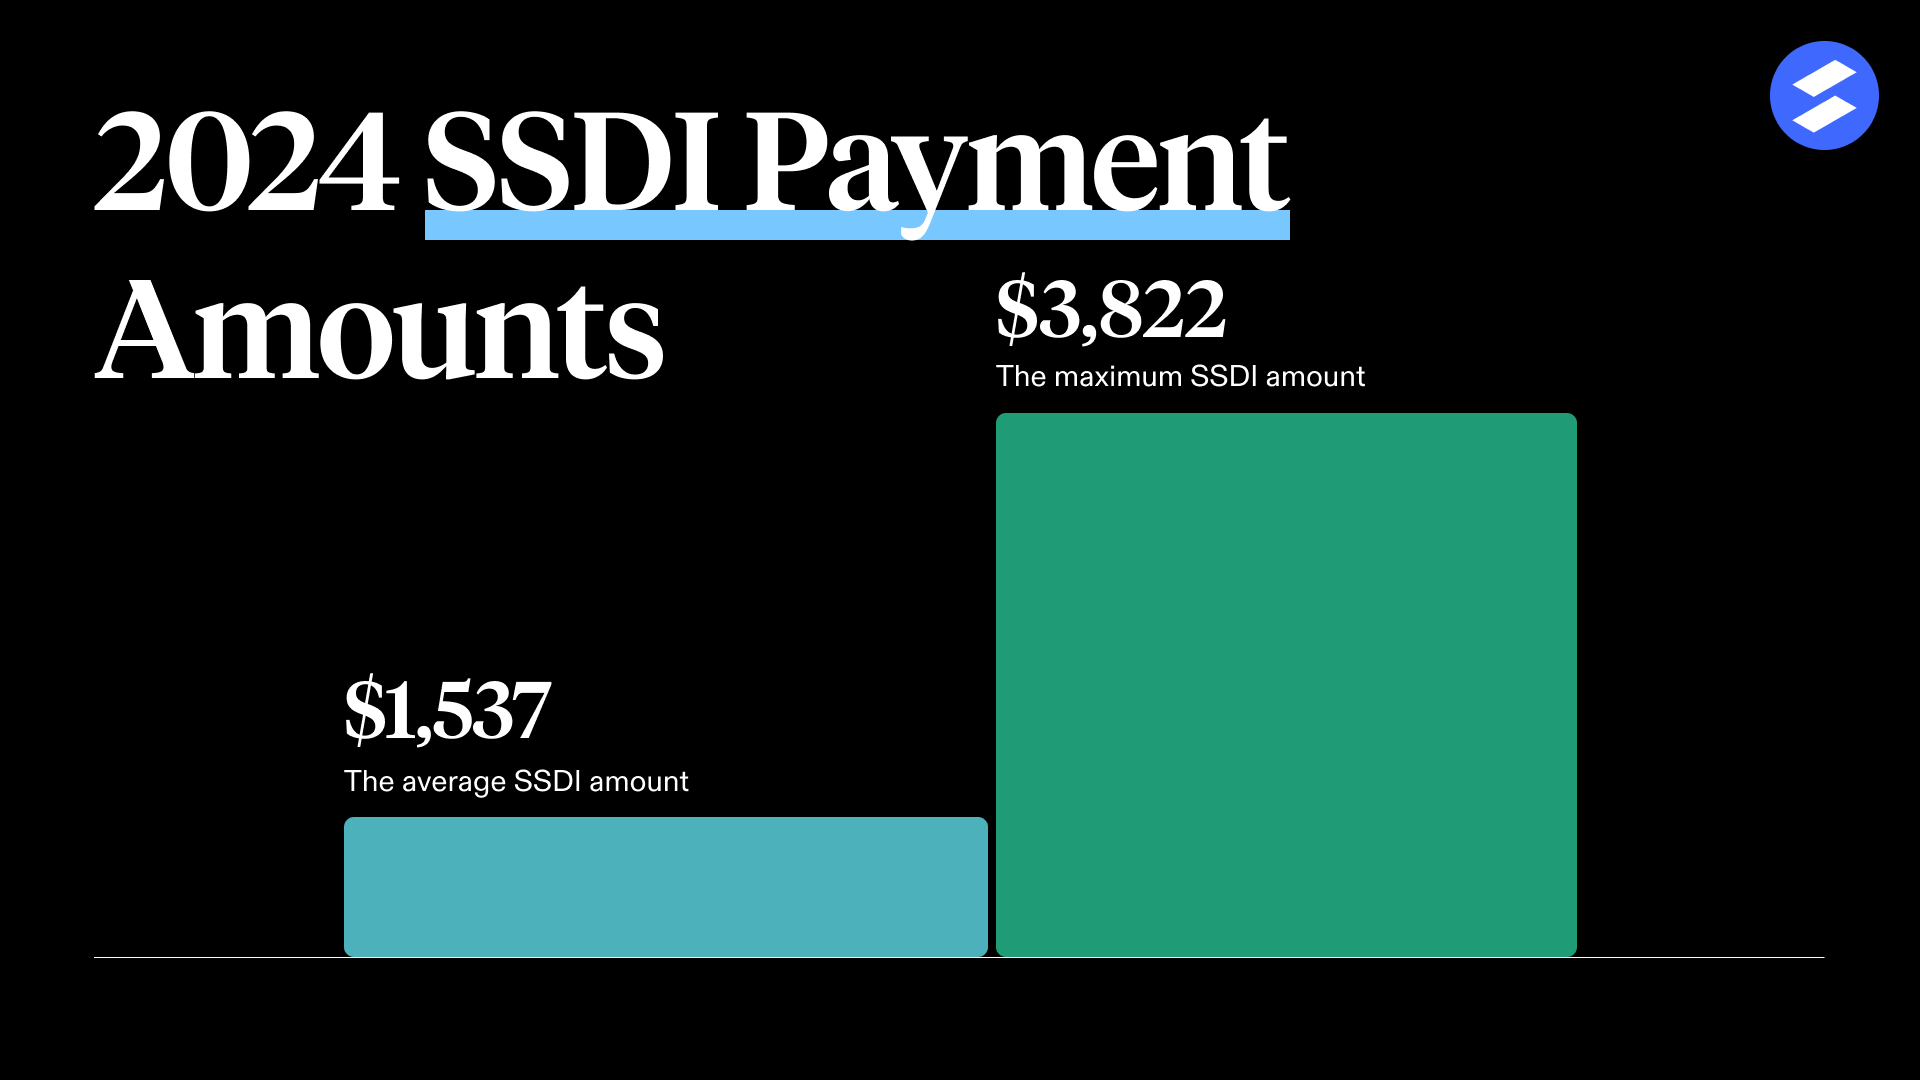 SSDI amounts